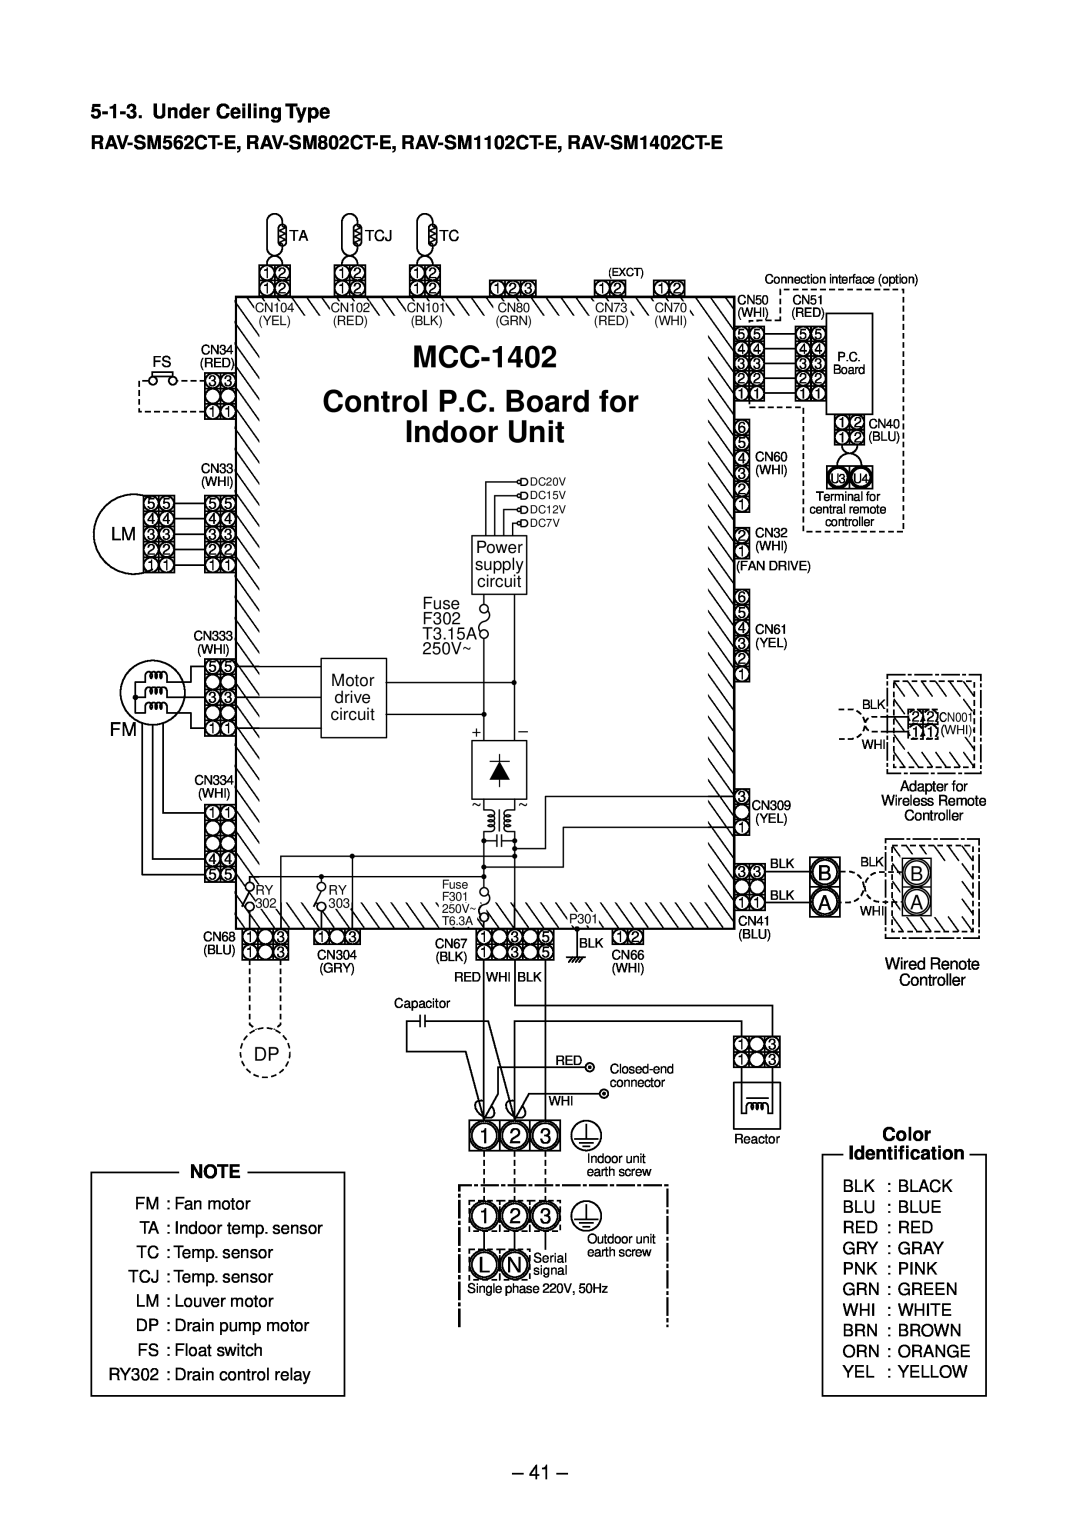 Toshiba RAV-SM1402UT-E, RAV-SM1102UT-E, RAV-SM802UT-E MCC-1402, Control P.C. Board for, Indoor Unit, Under Ceiling Type, 41 